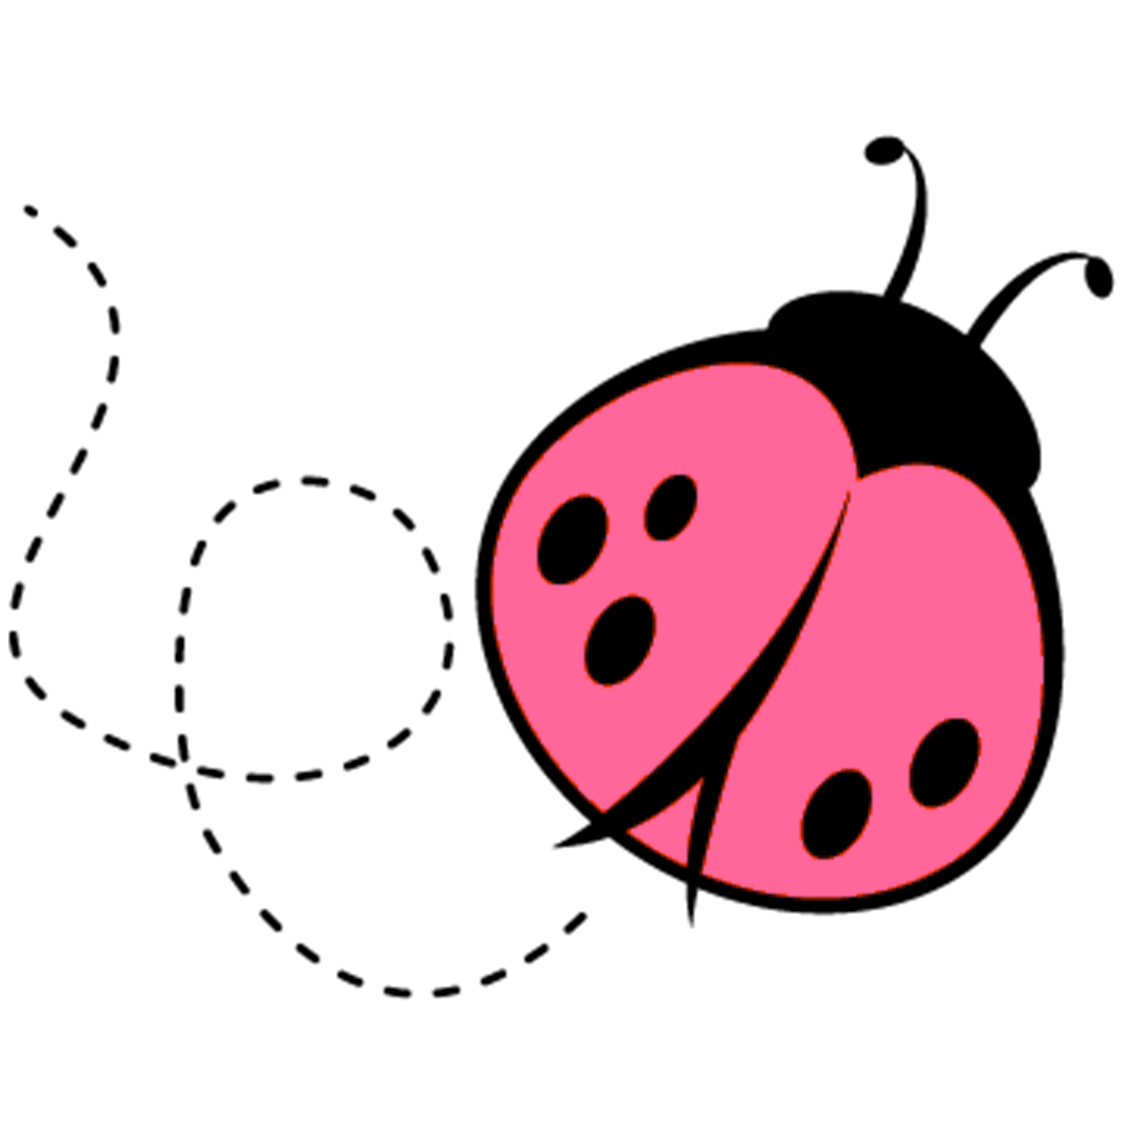 ladybug clipart, ladybug pink flower clipart panda clipart images 32098